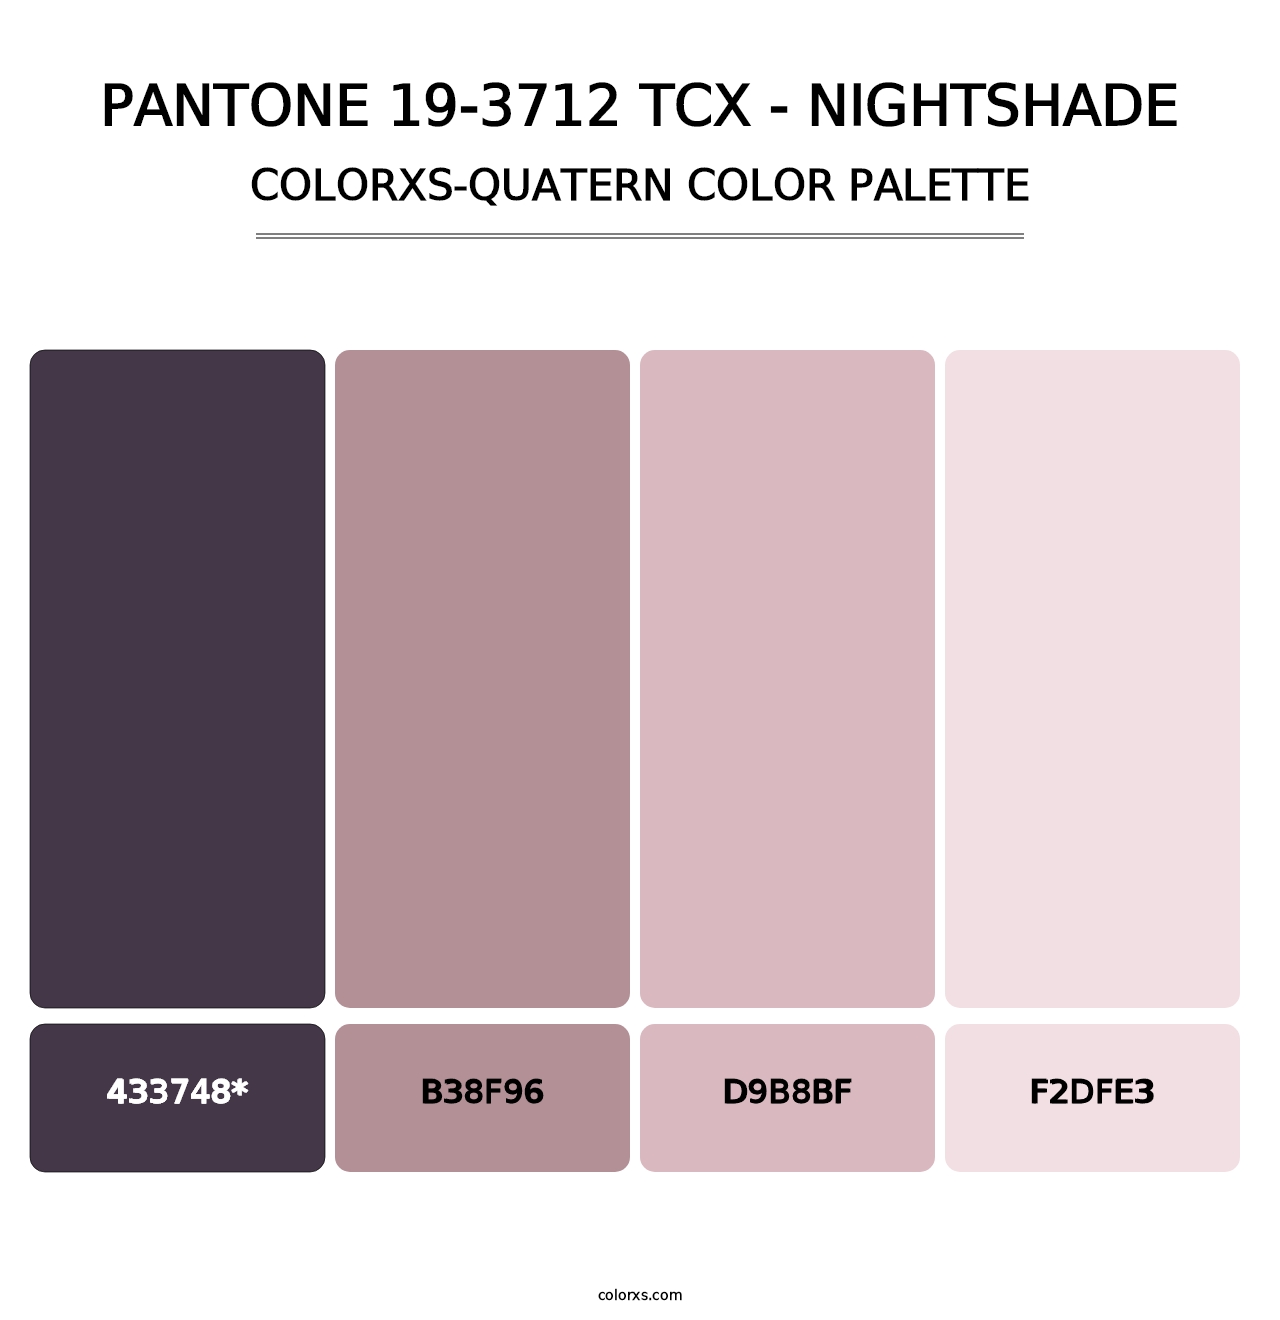 PANTONE 19-3712 TCX - Nightshade - Colorxs Quatern Palette